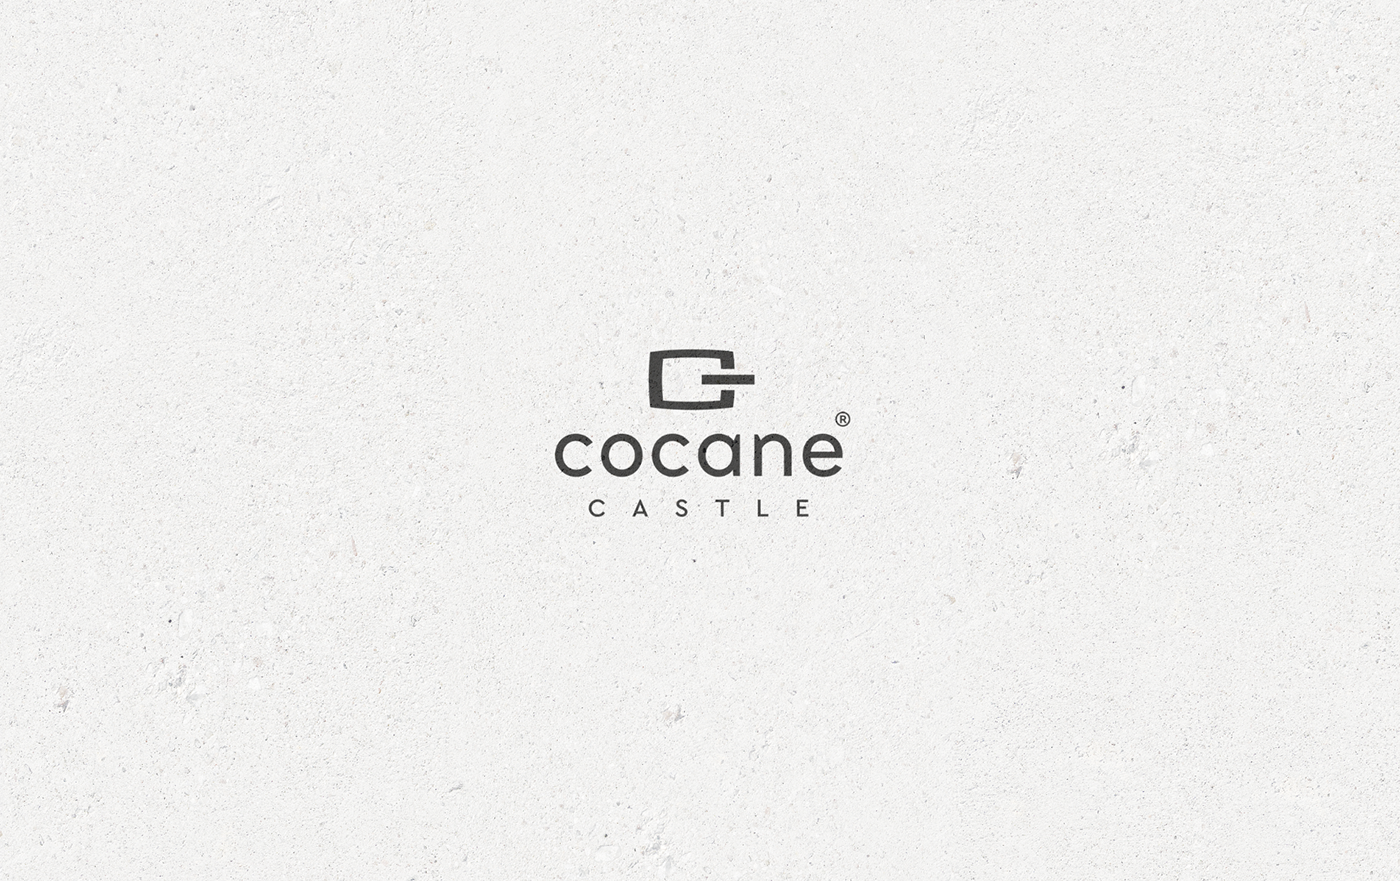 cocane castle Castle Cocane logo simpleandlogical Creativity clothing brand Clothing brand London